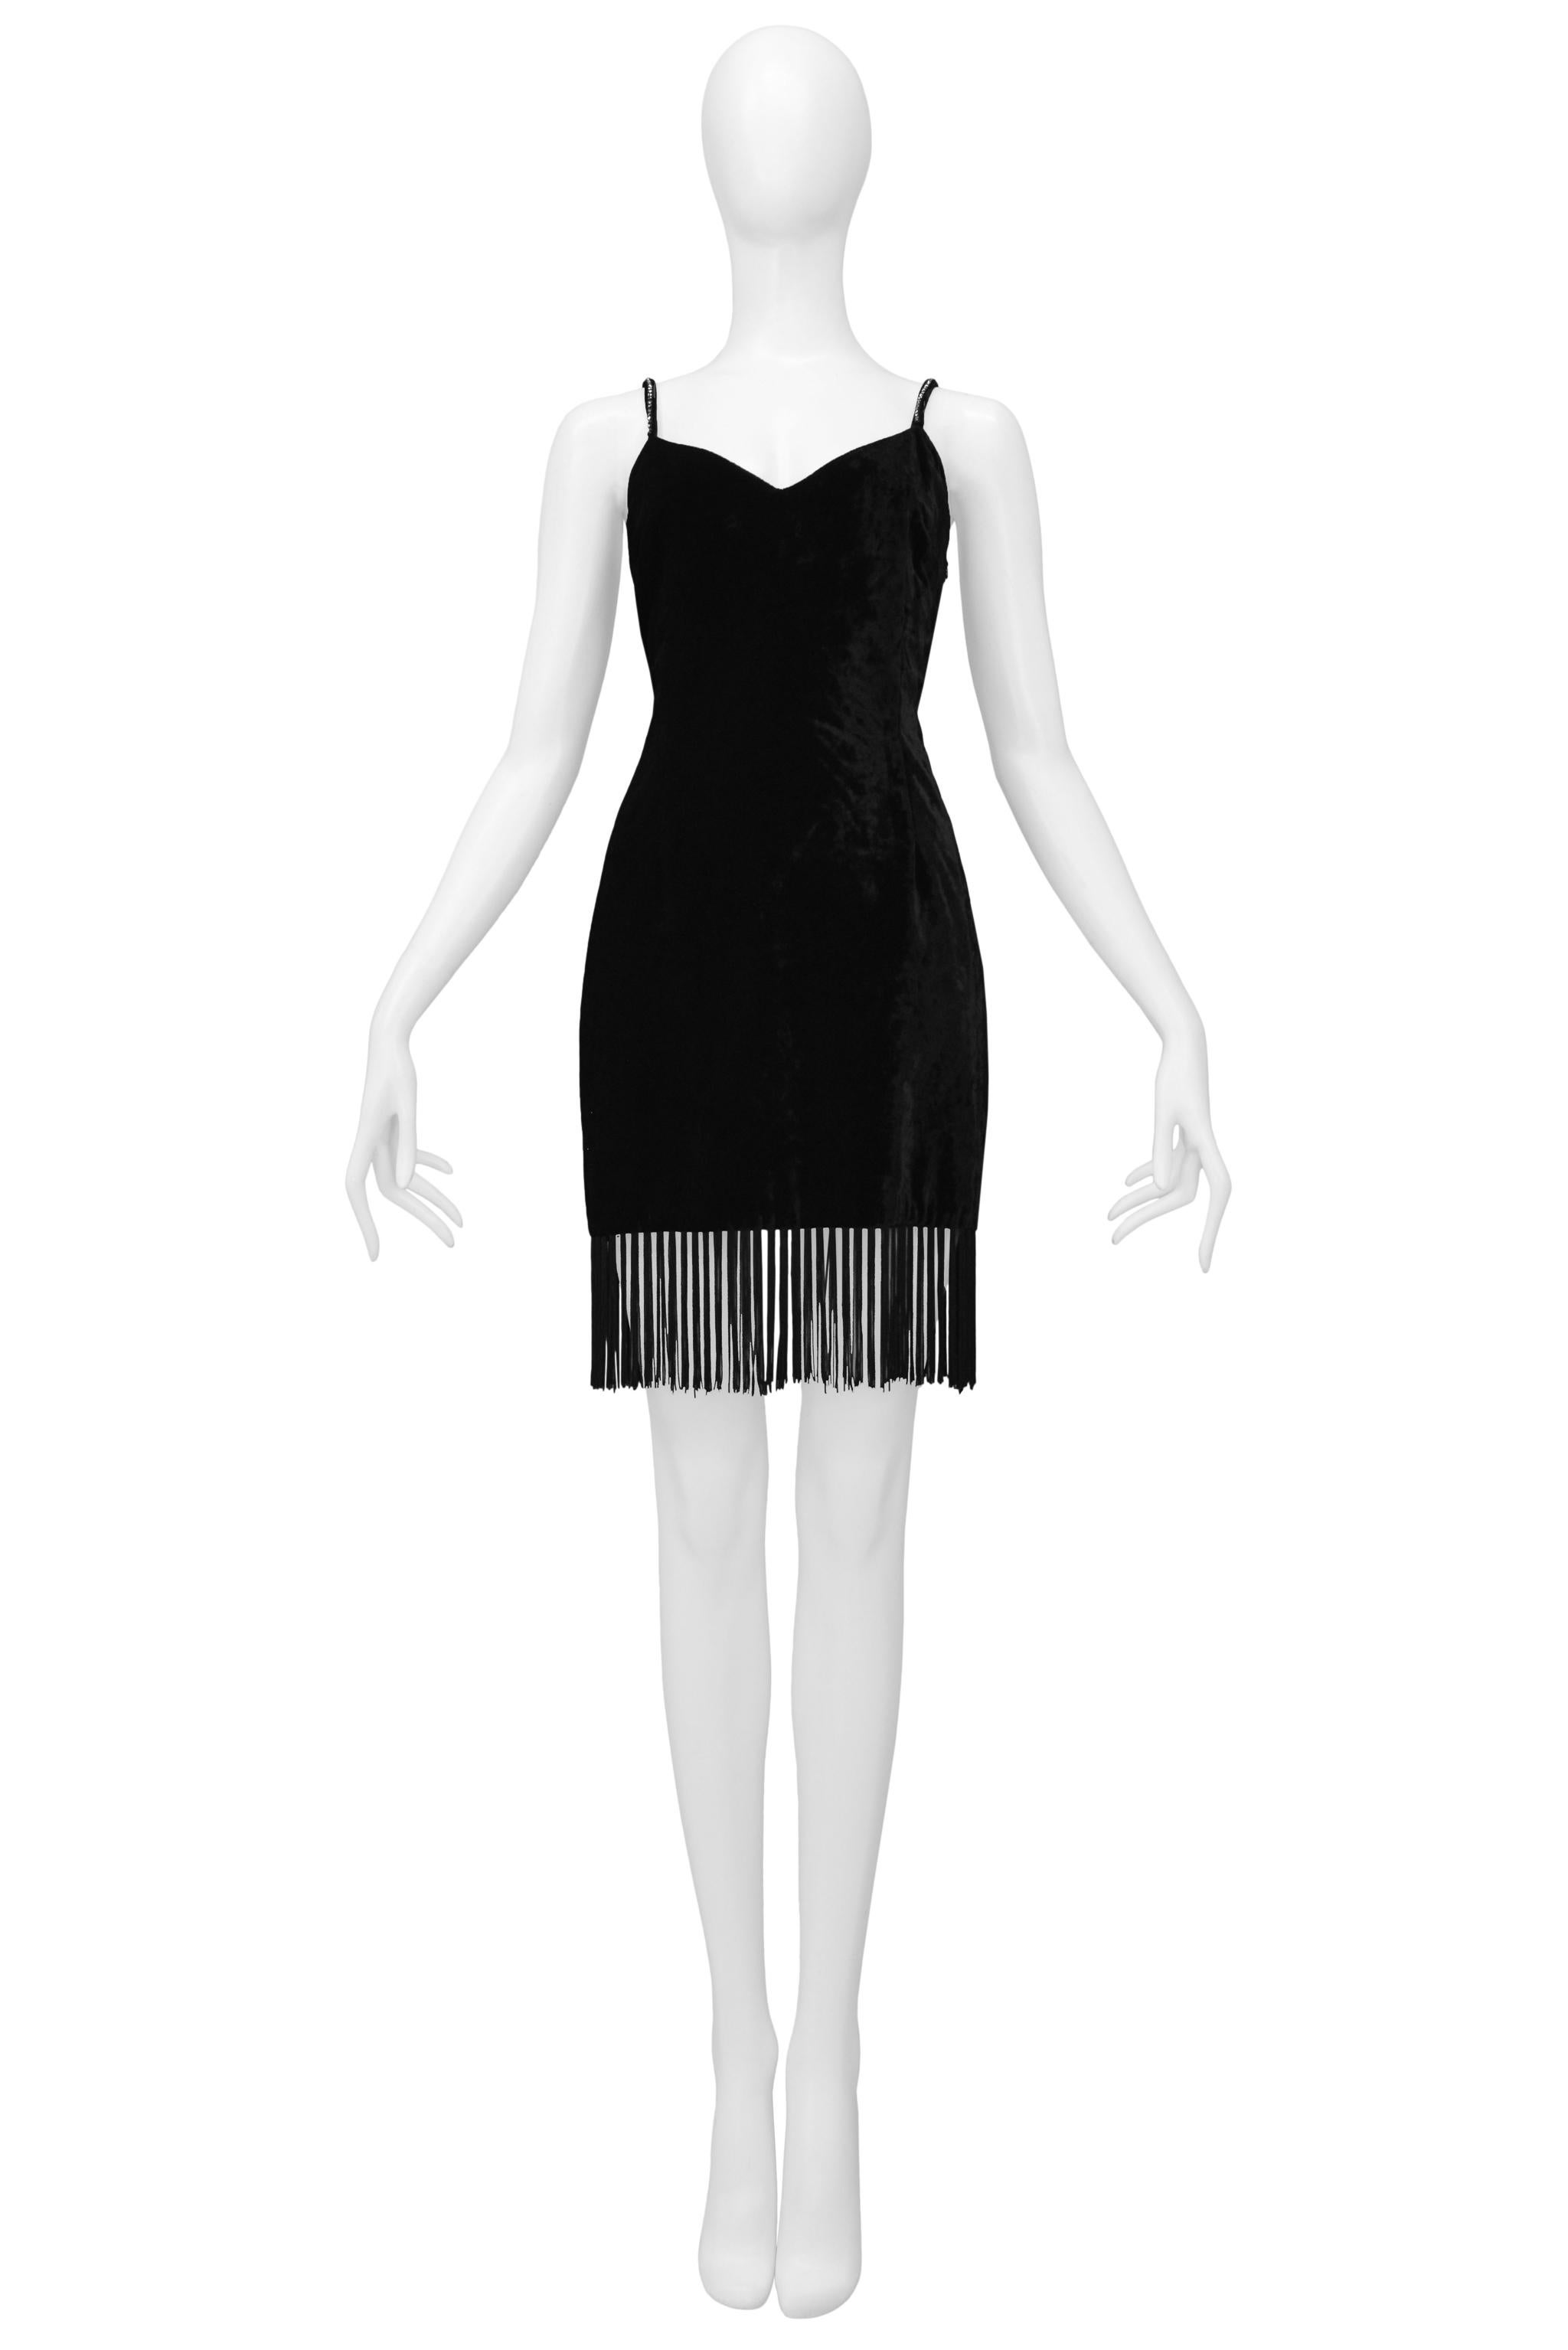 Resurrection Vintage is excited to offer a vintage Dolce & Gabbana black velvet slip dress featuring a fitted body, skinny straps with rhinestones, a fringe hem, and knee-length. 

Dolce & Gabbana
Size 42
Viscose, Cotton, Modal
Excellent Vintage